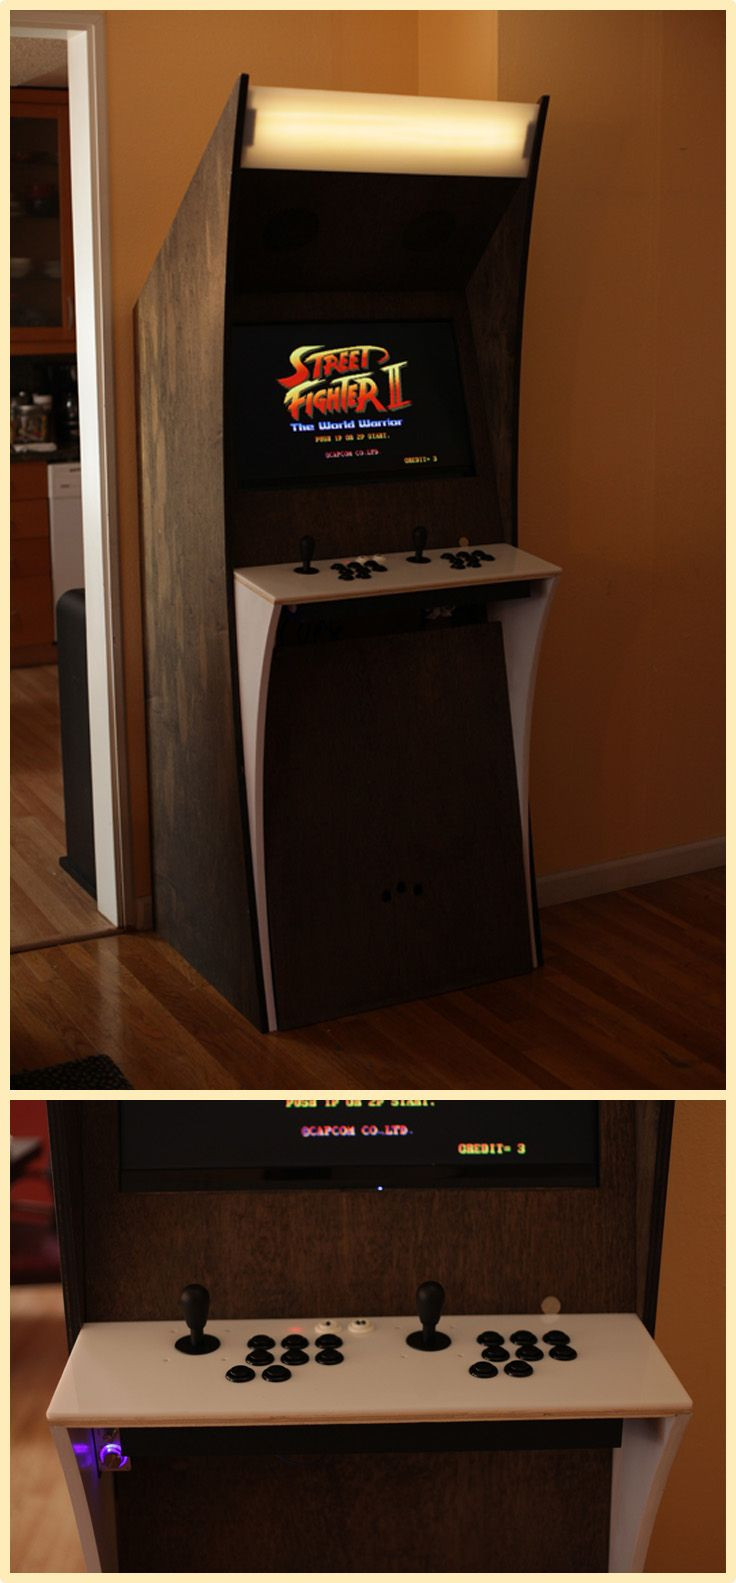 Best ideas about Mameroom DIY Cabinet Kit
. Save or Pin Stylish Custom Arcade Cabinet via Reddit user Scalarr Now.